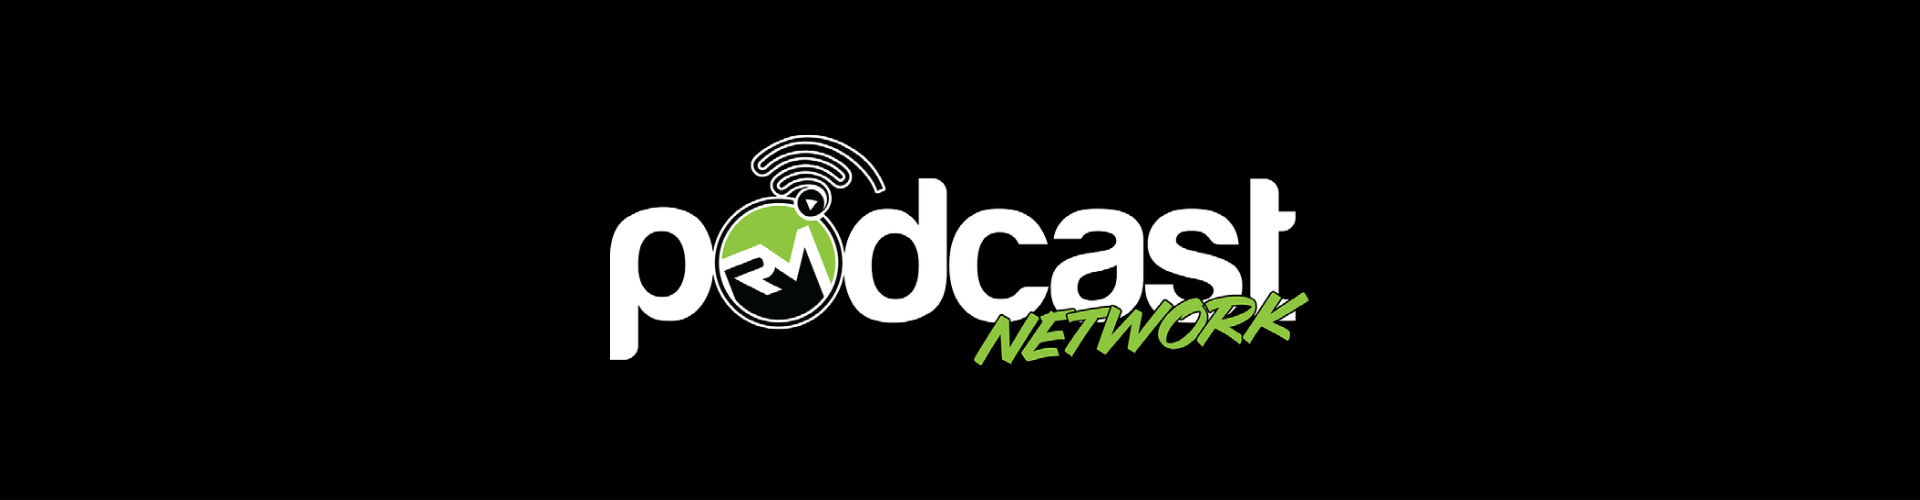 Regional Media Podcast Network